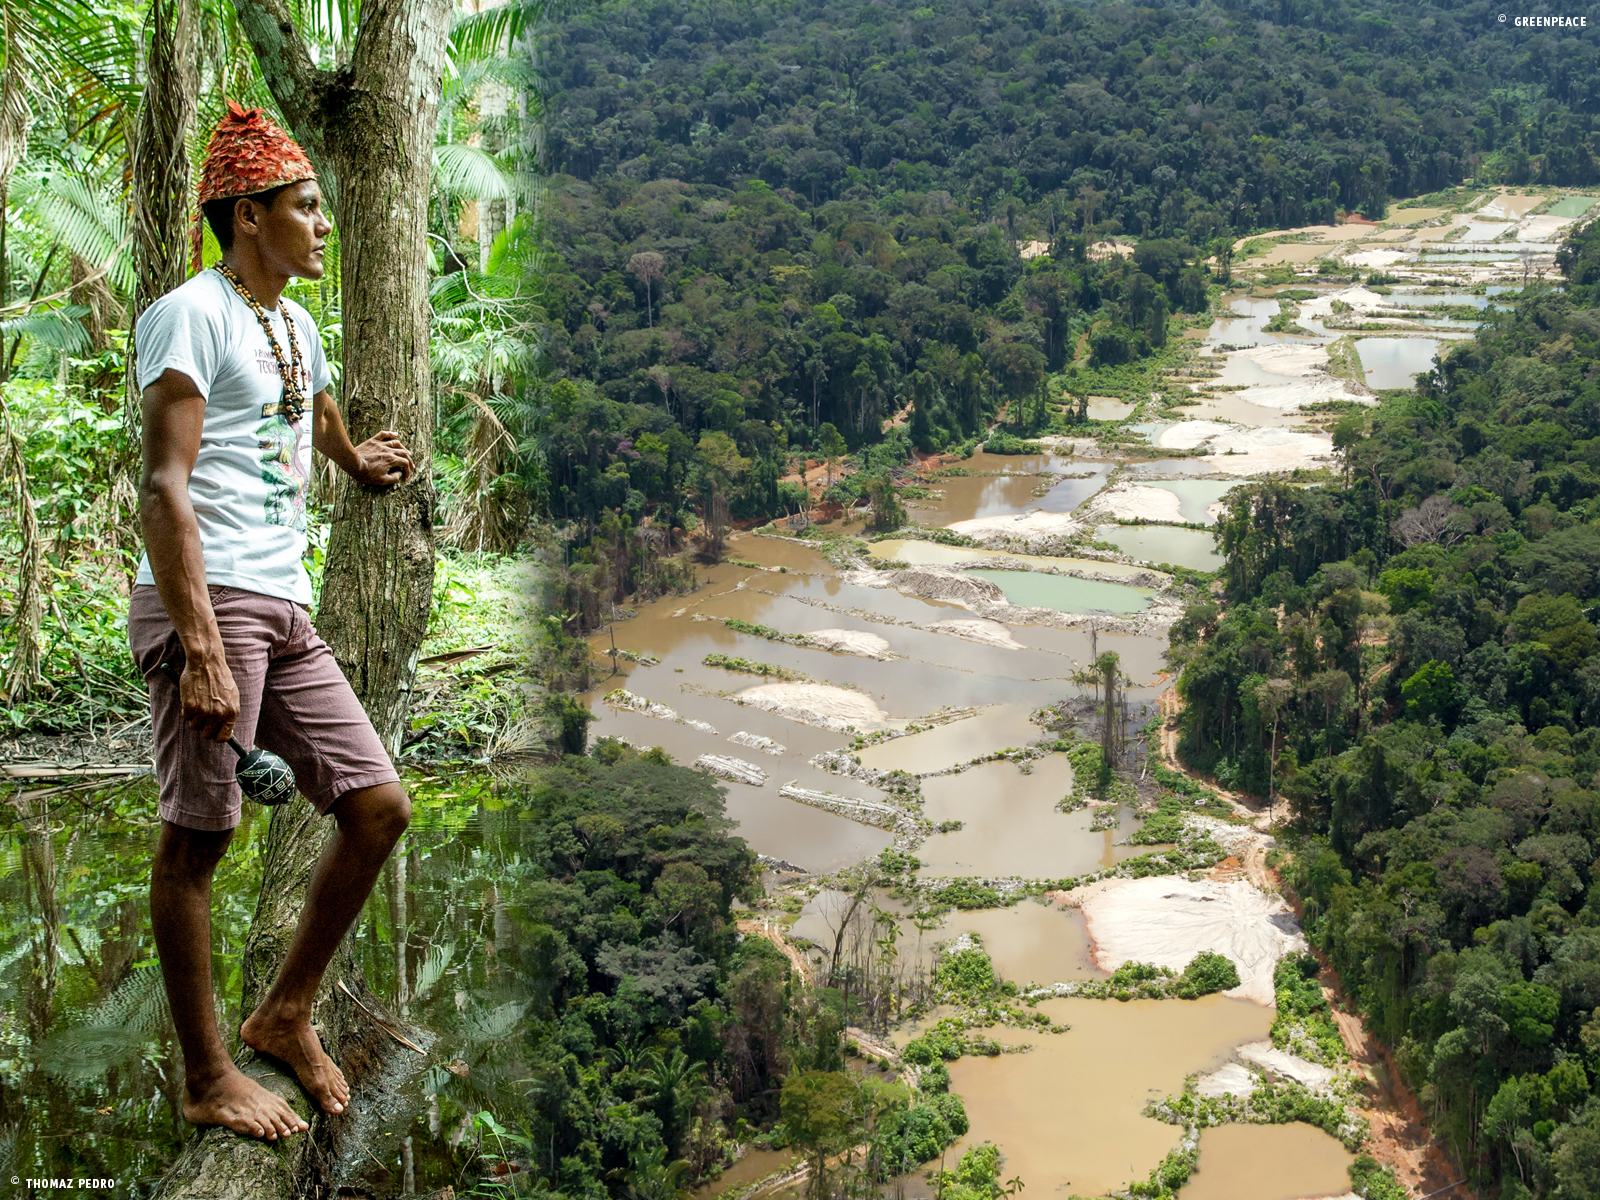 Gold mining in protected and sensitive habitats: A trail of devastation runs through the Munduruku indigenous territory. Photos: Thomaz Pedro / Greenpeace